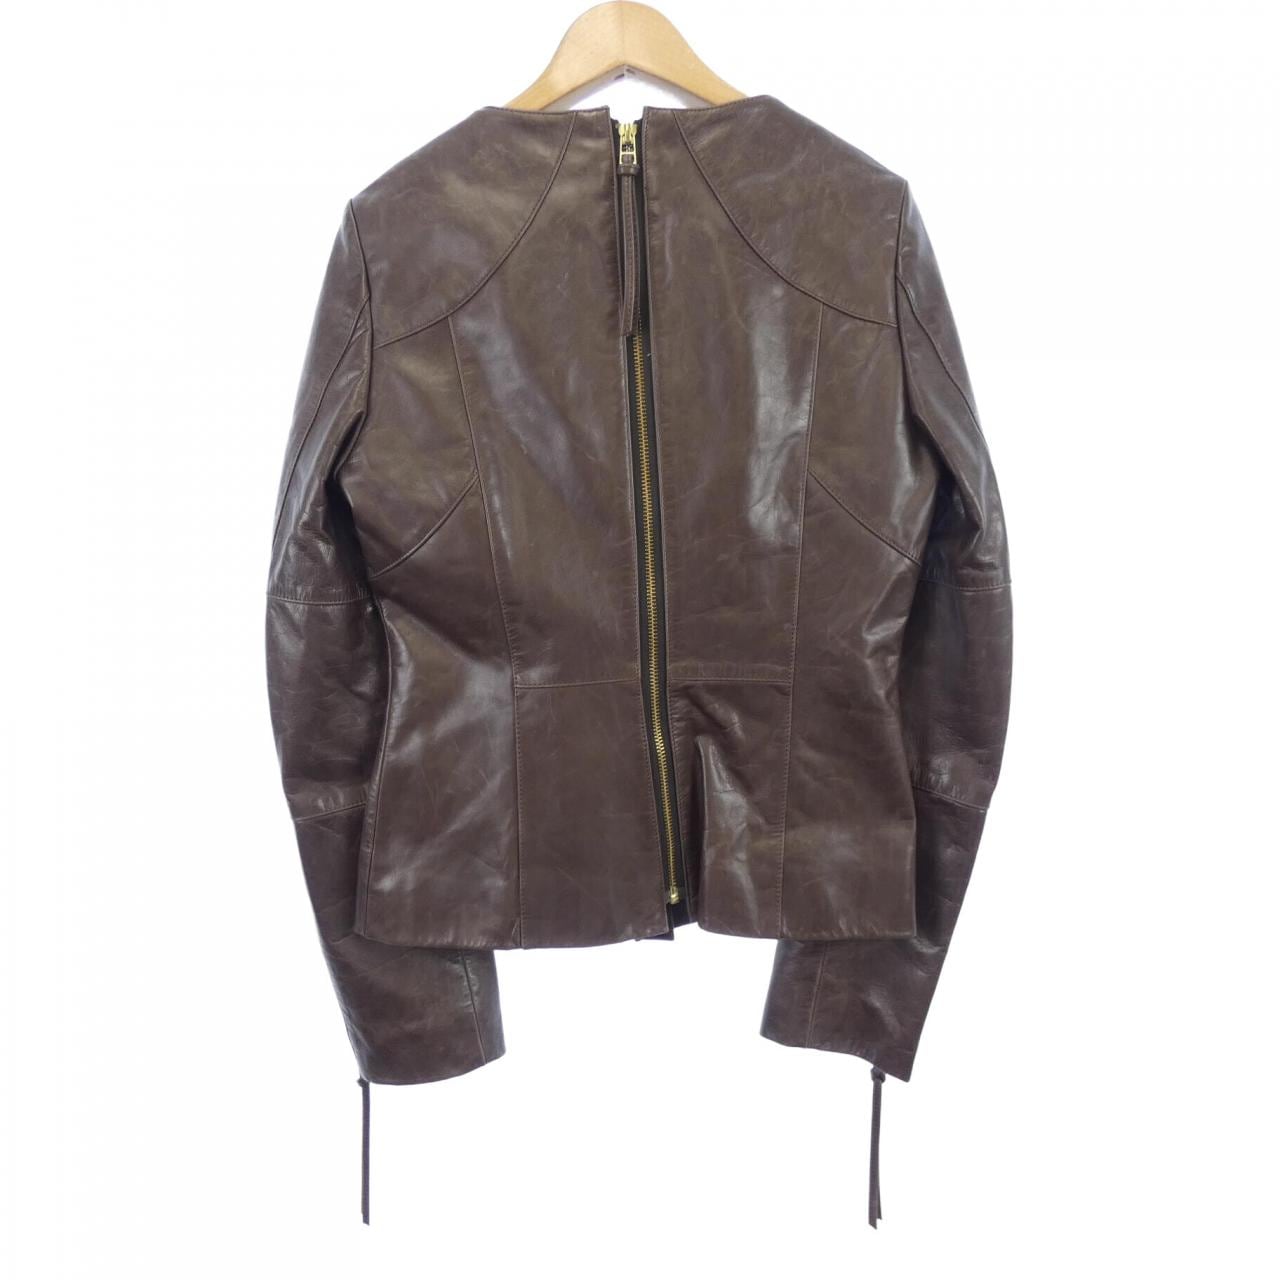 OBJET STANDARD leather jacket